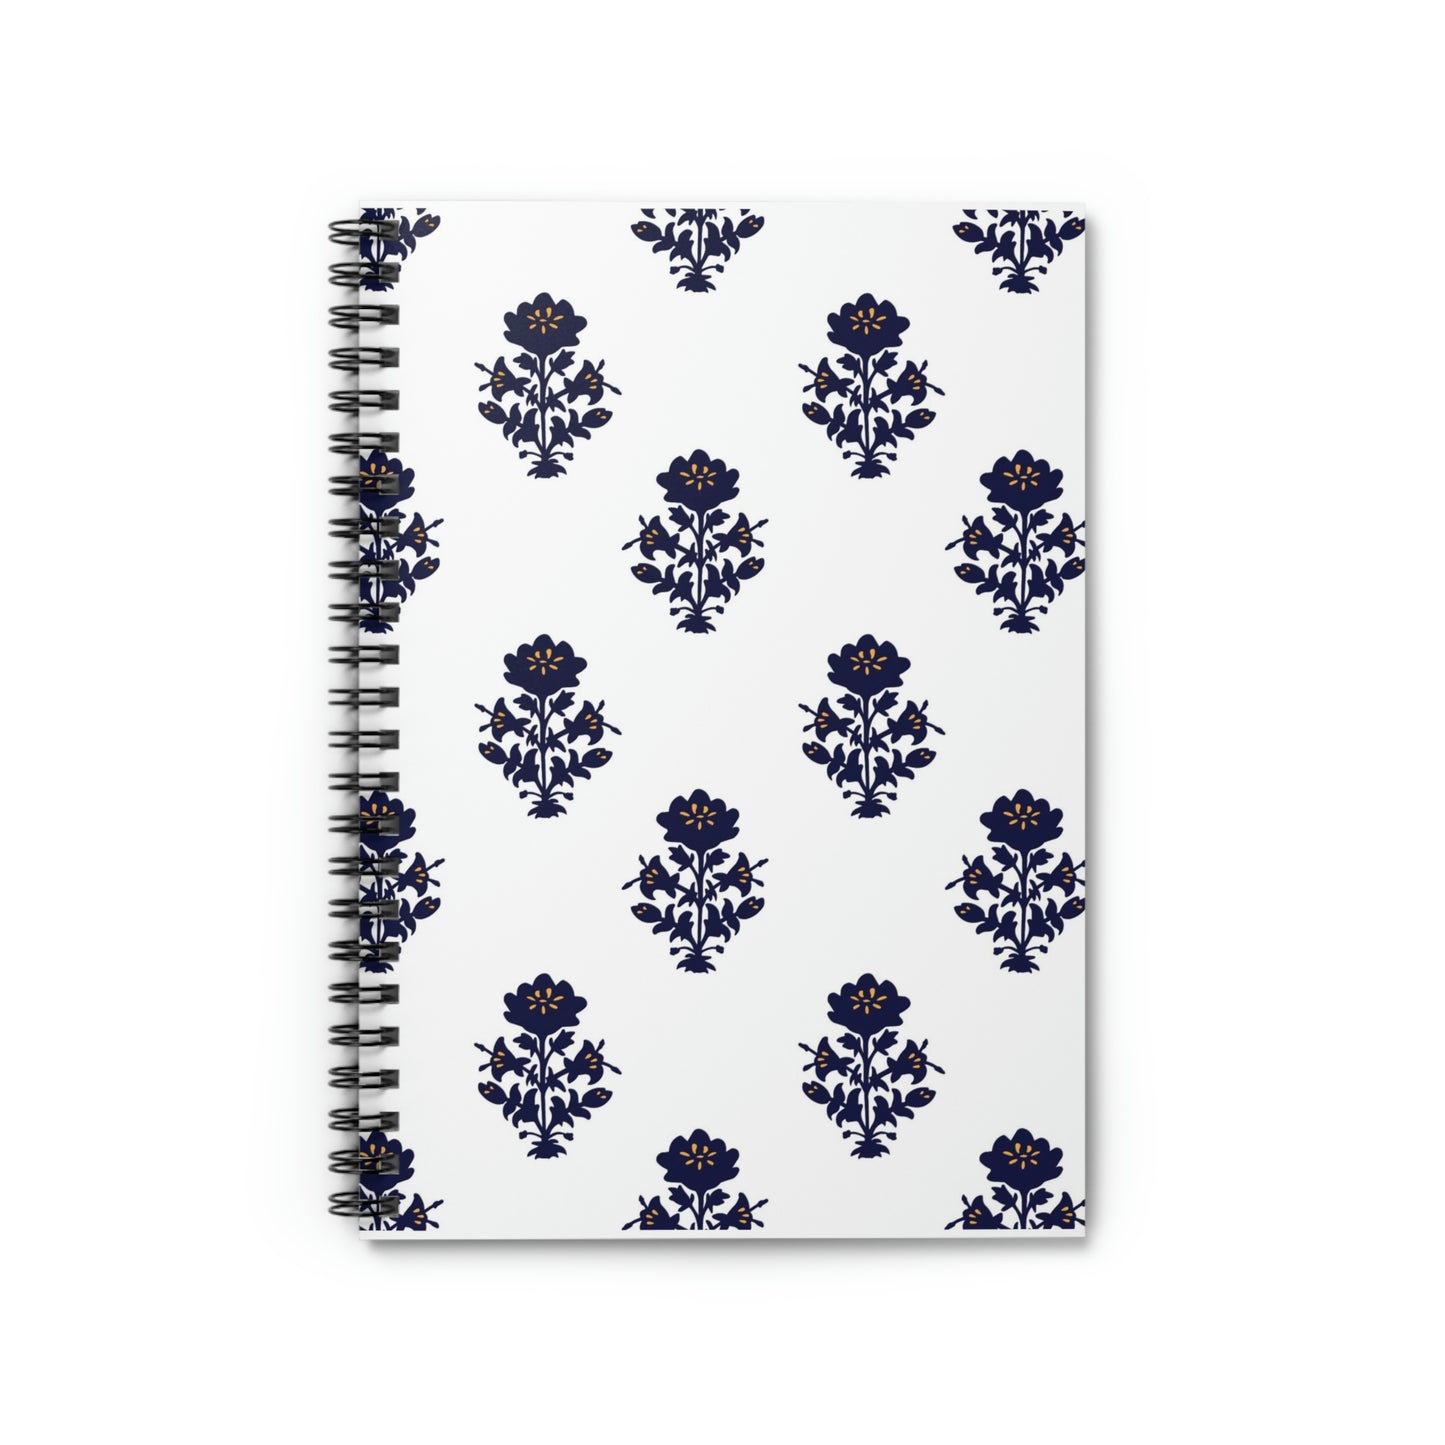 Blue Floral Spiral Notebook - Ruled Line, Indian Block Print